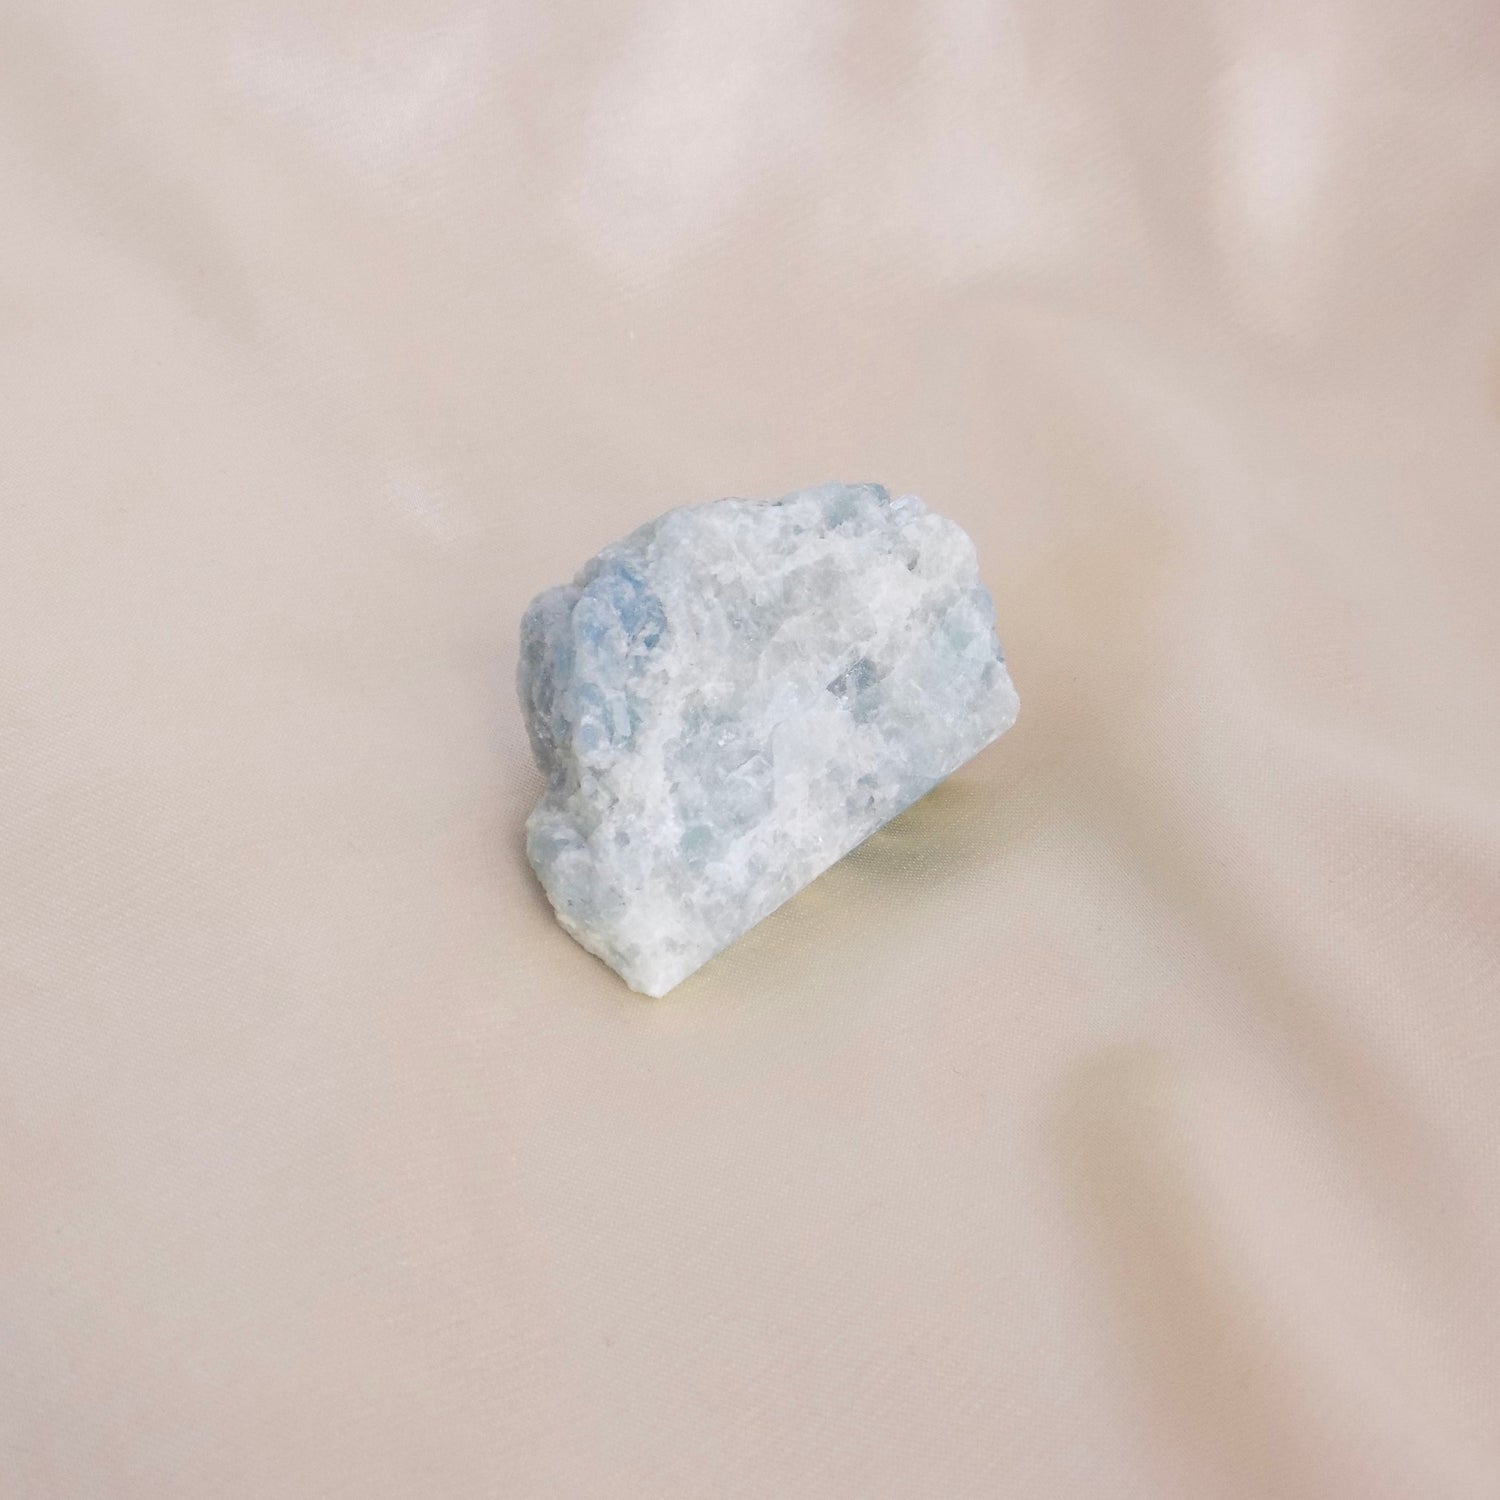 Raw Aquamarine Crystal For Home Decor Or Calming Healing Gemstone